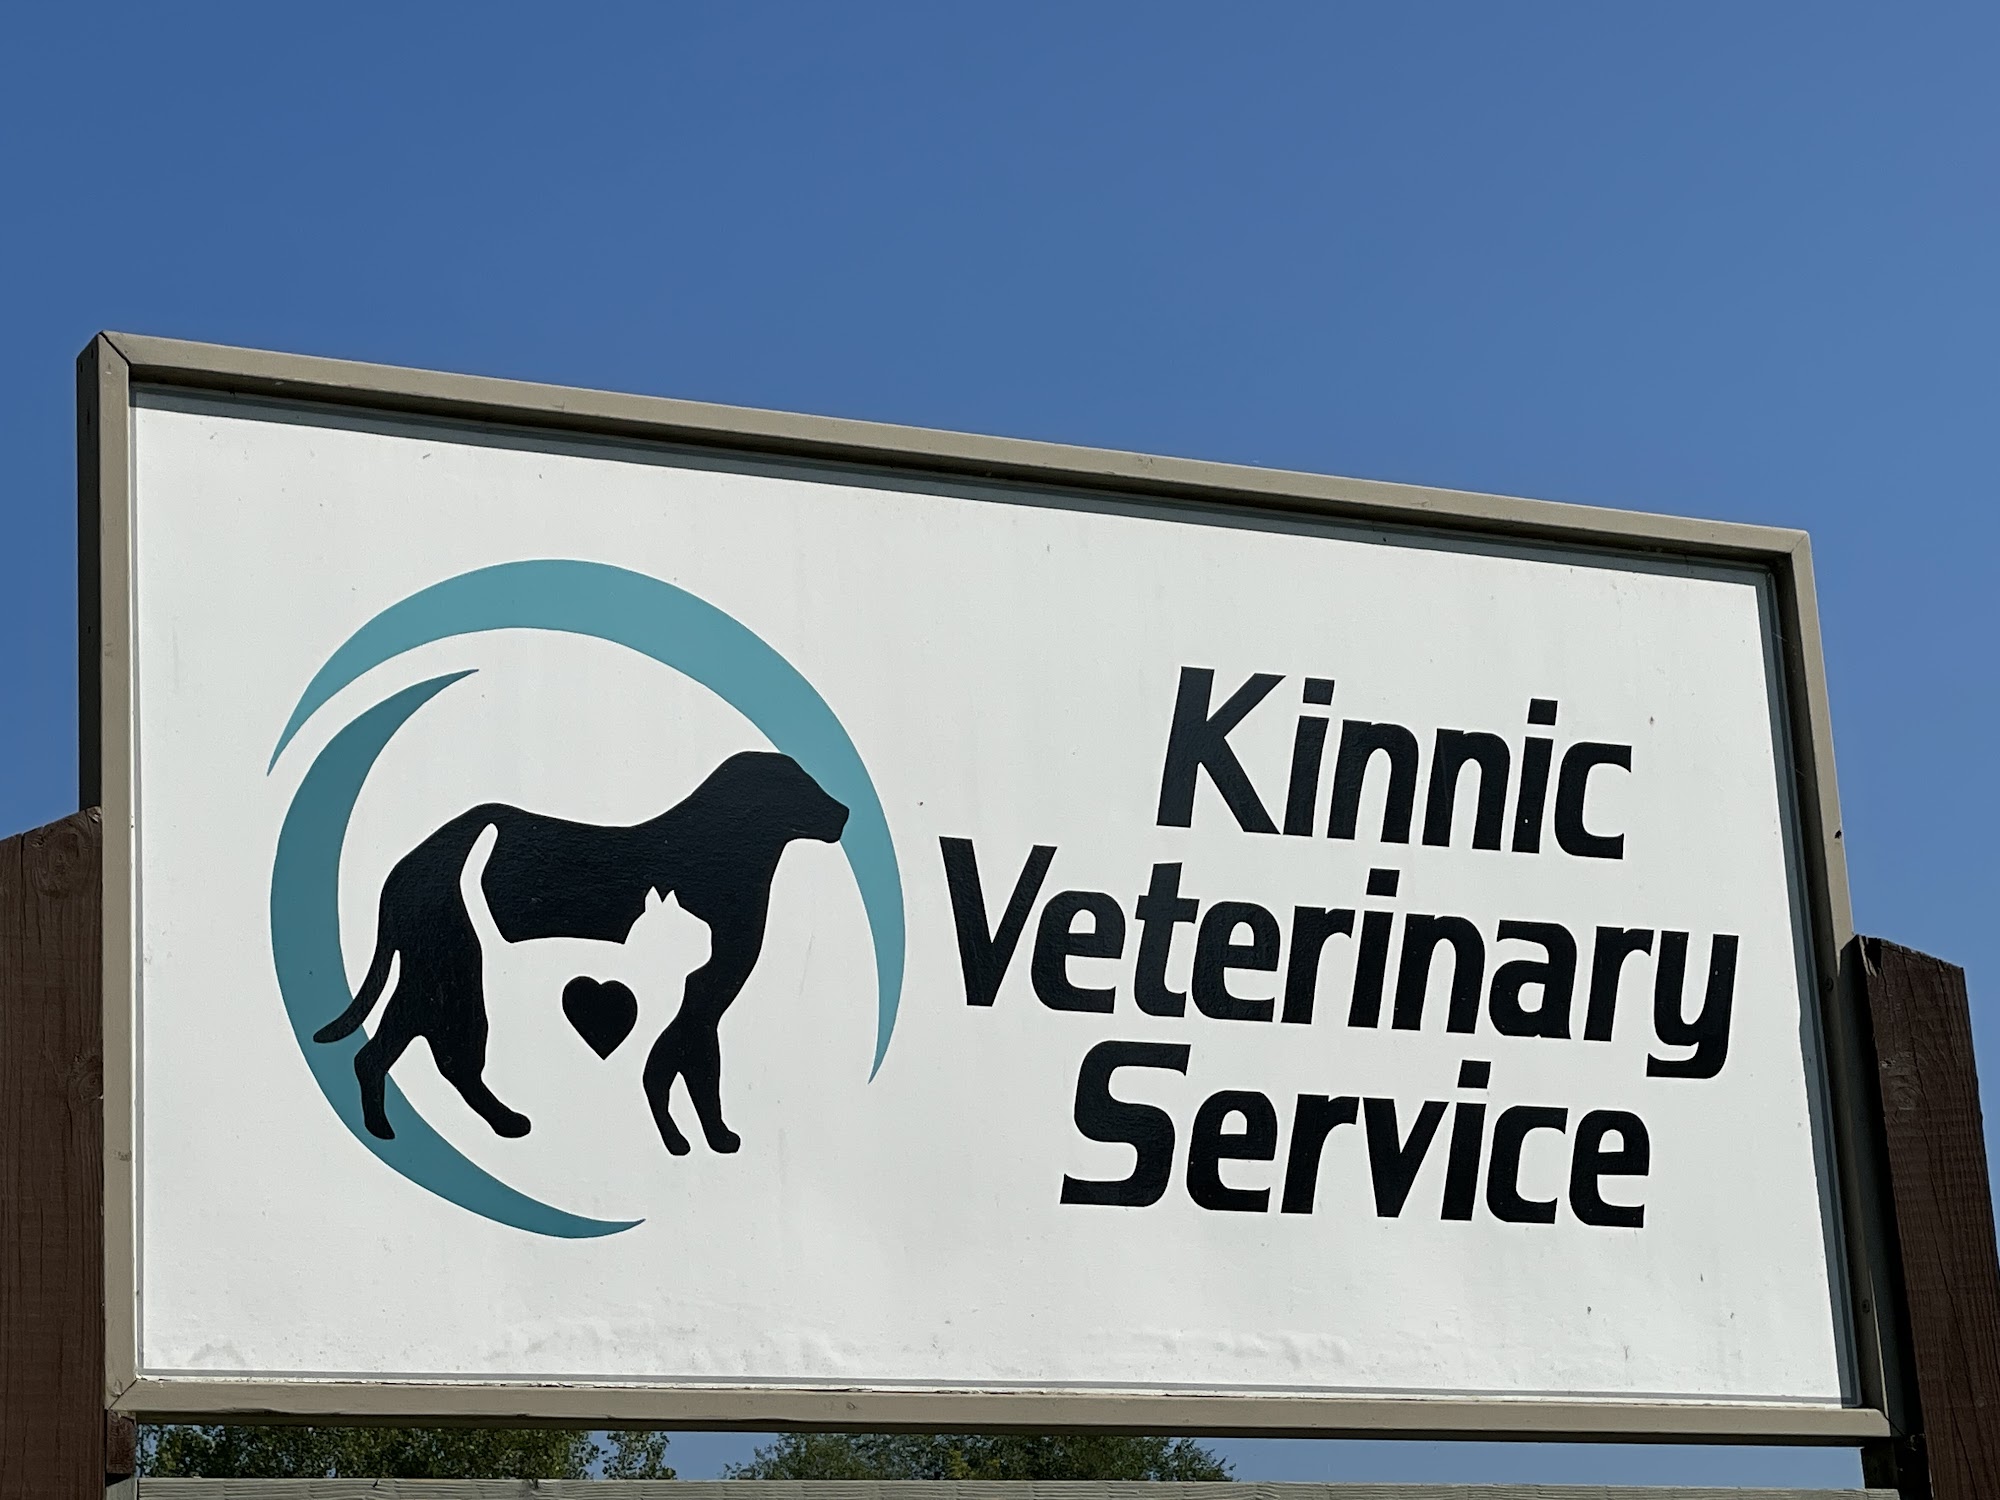 Kinnic Veterinary Service